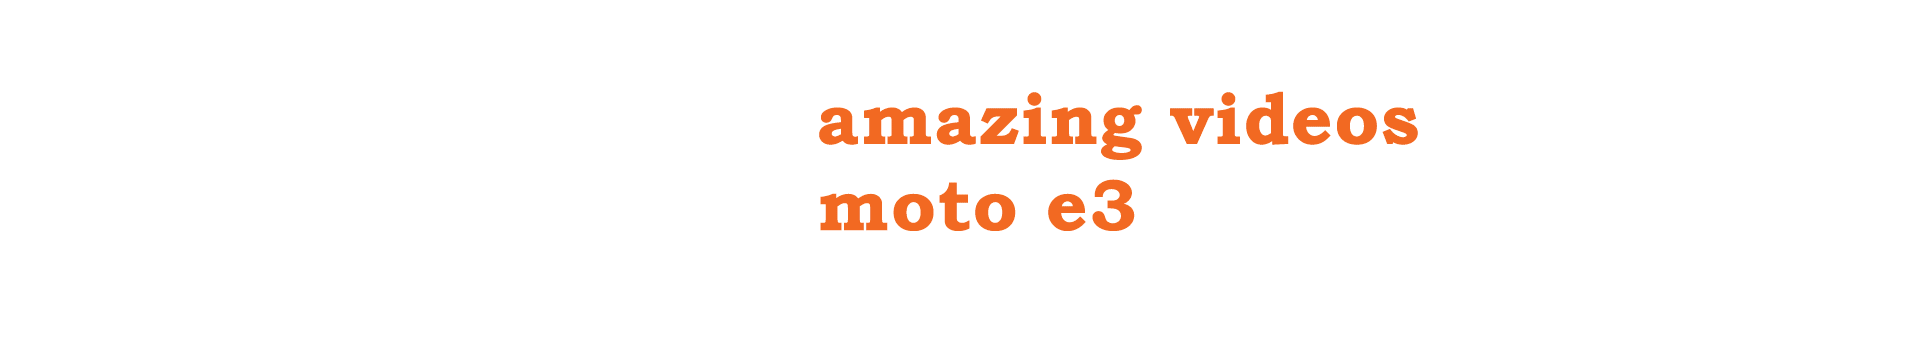 10 Amazing Videos of Moto E3